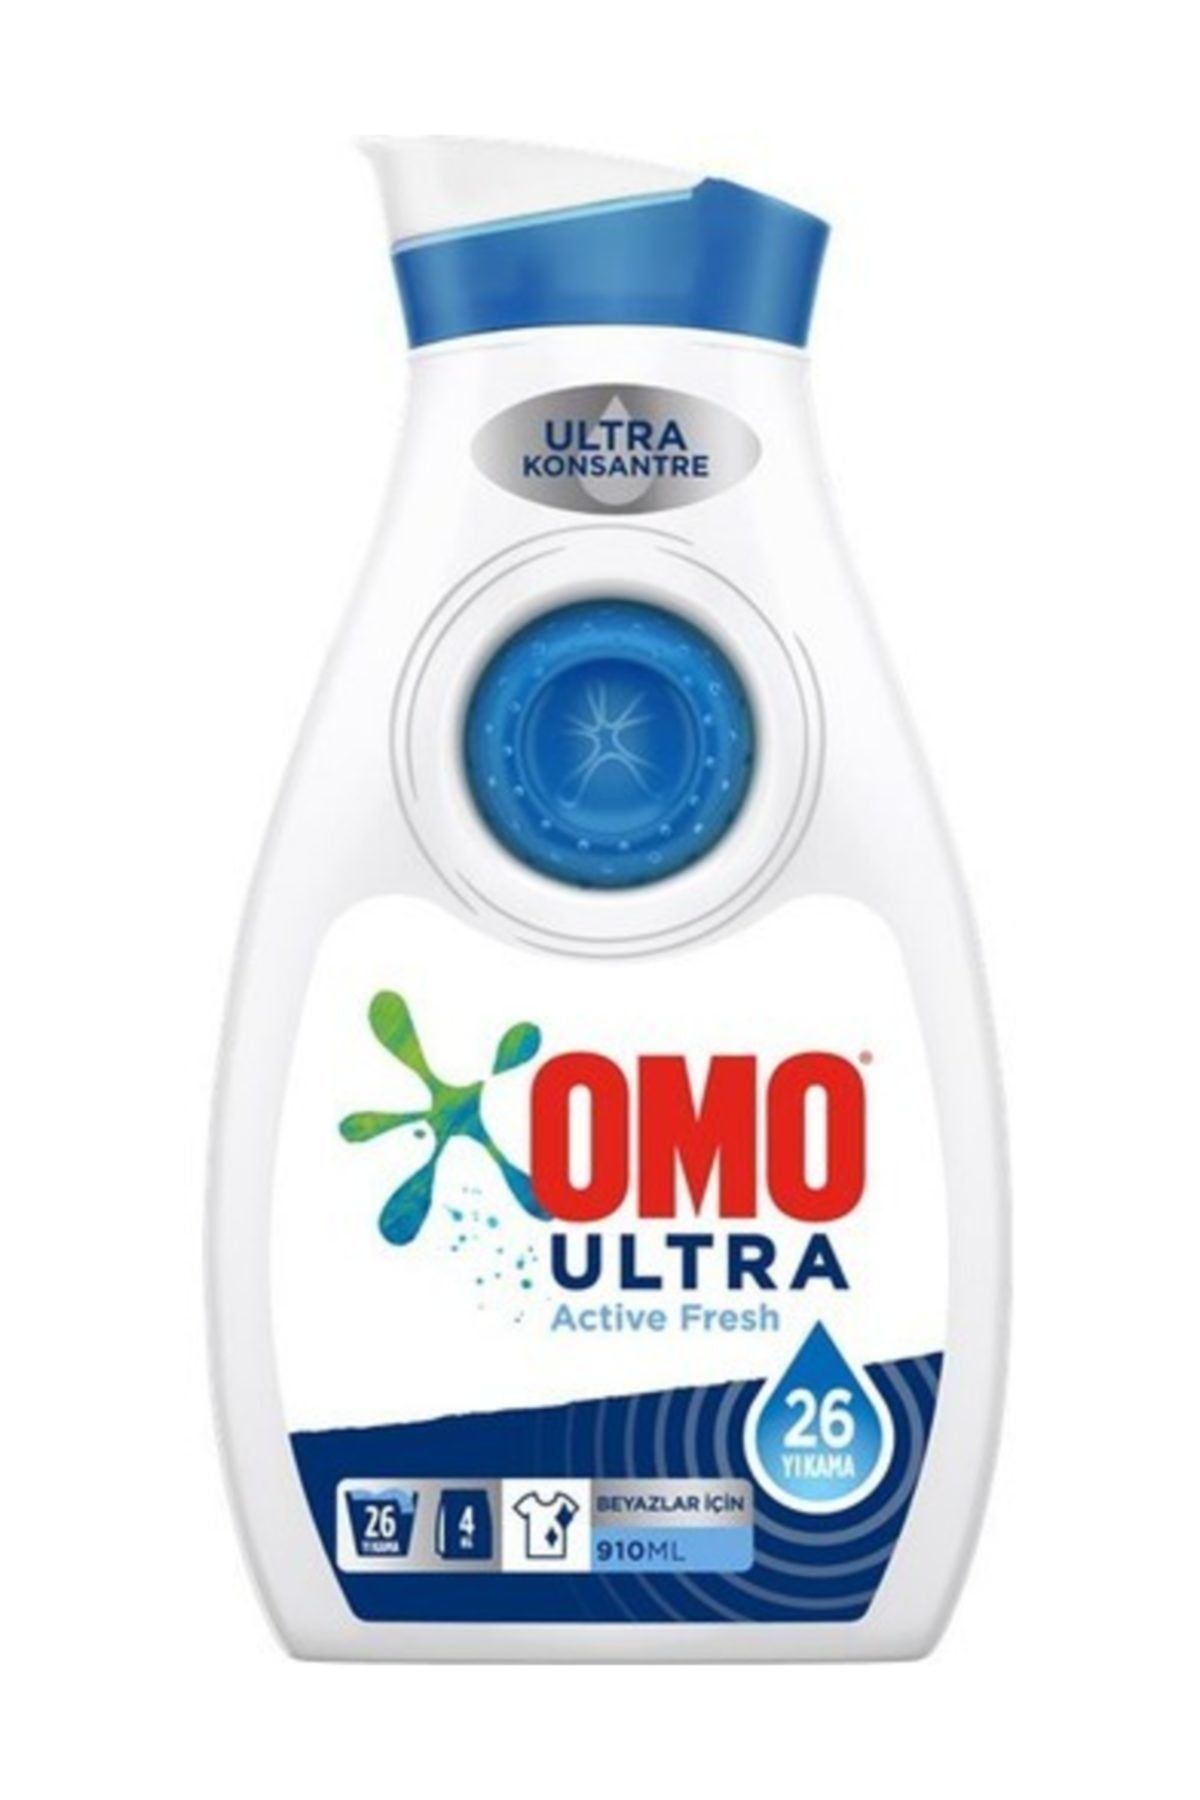 Omo Active Fresh. Гель для стирки ОМО. Active Ultra. Konsantre. Ultra active